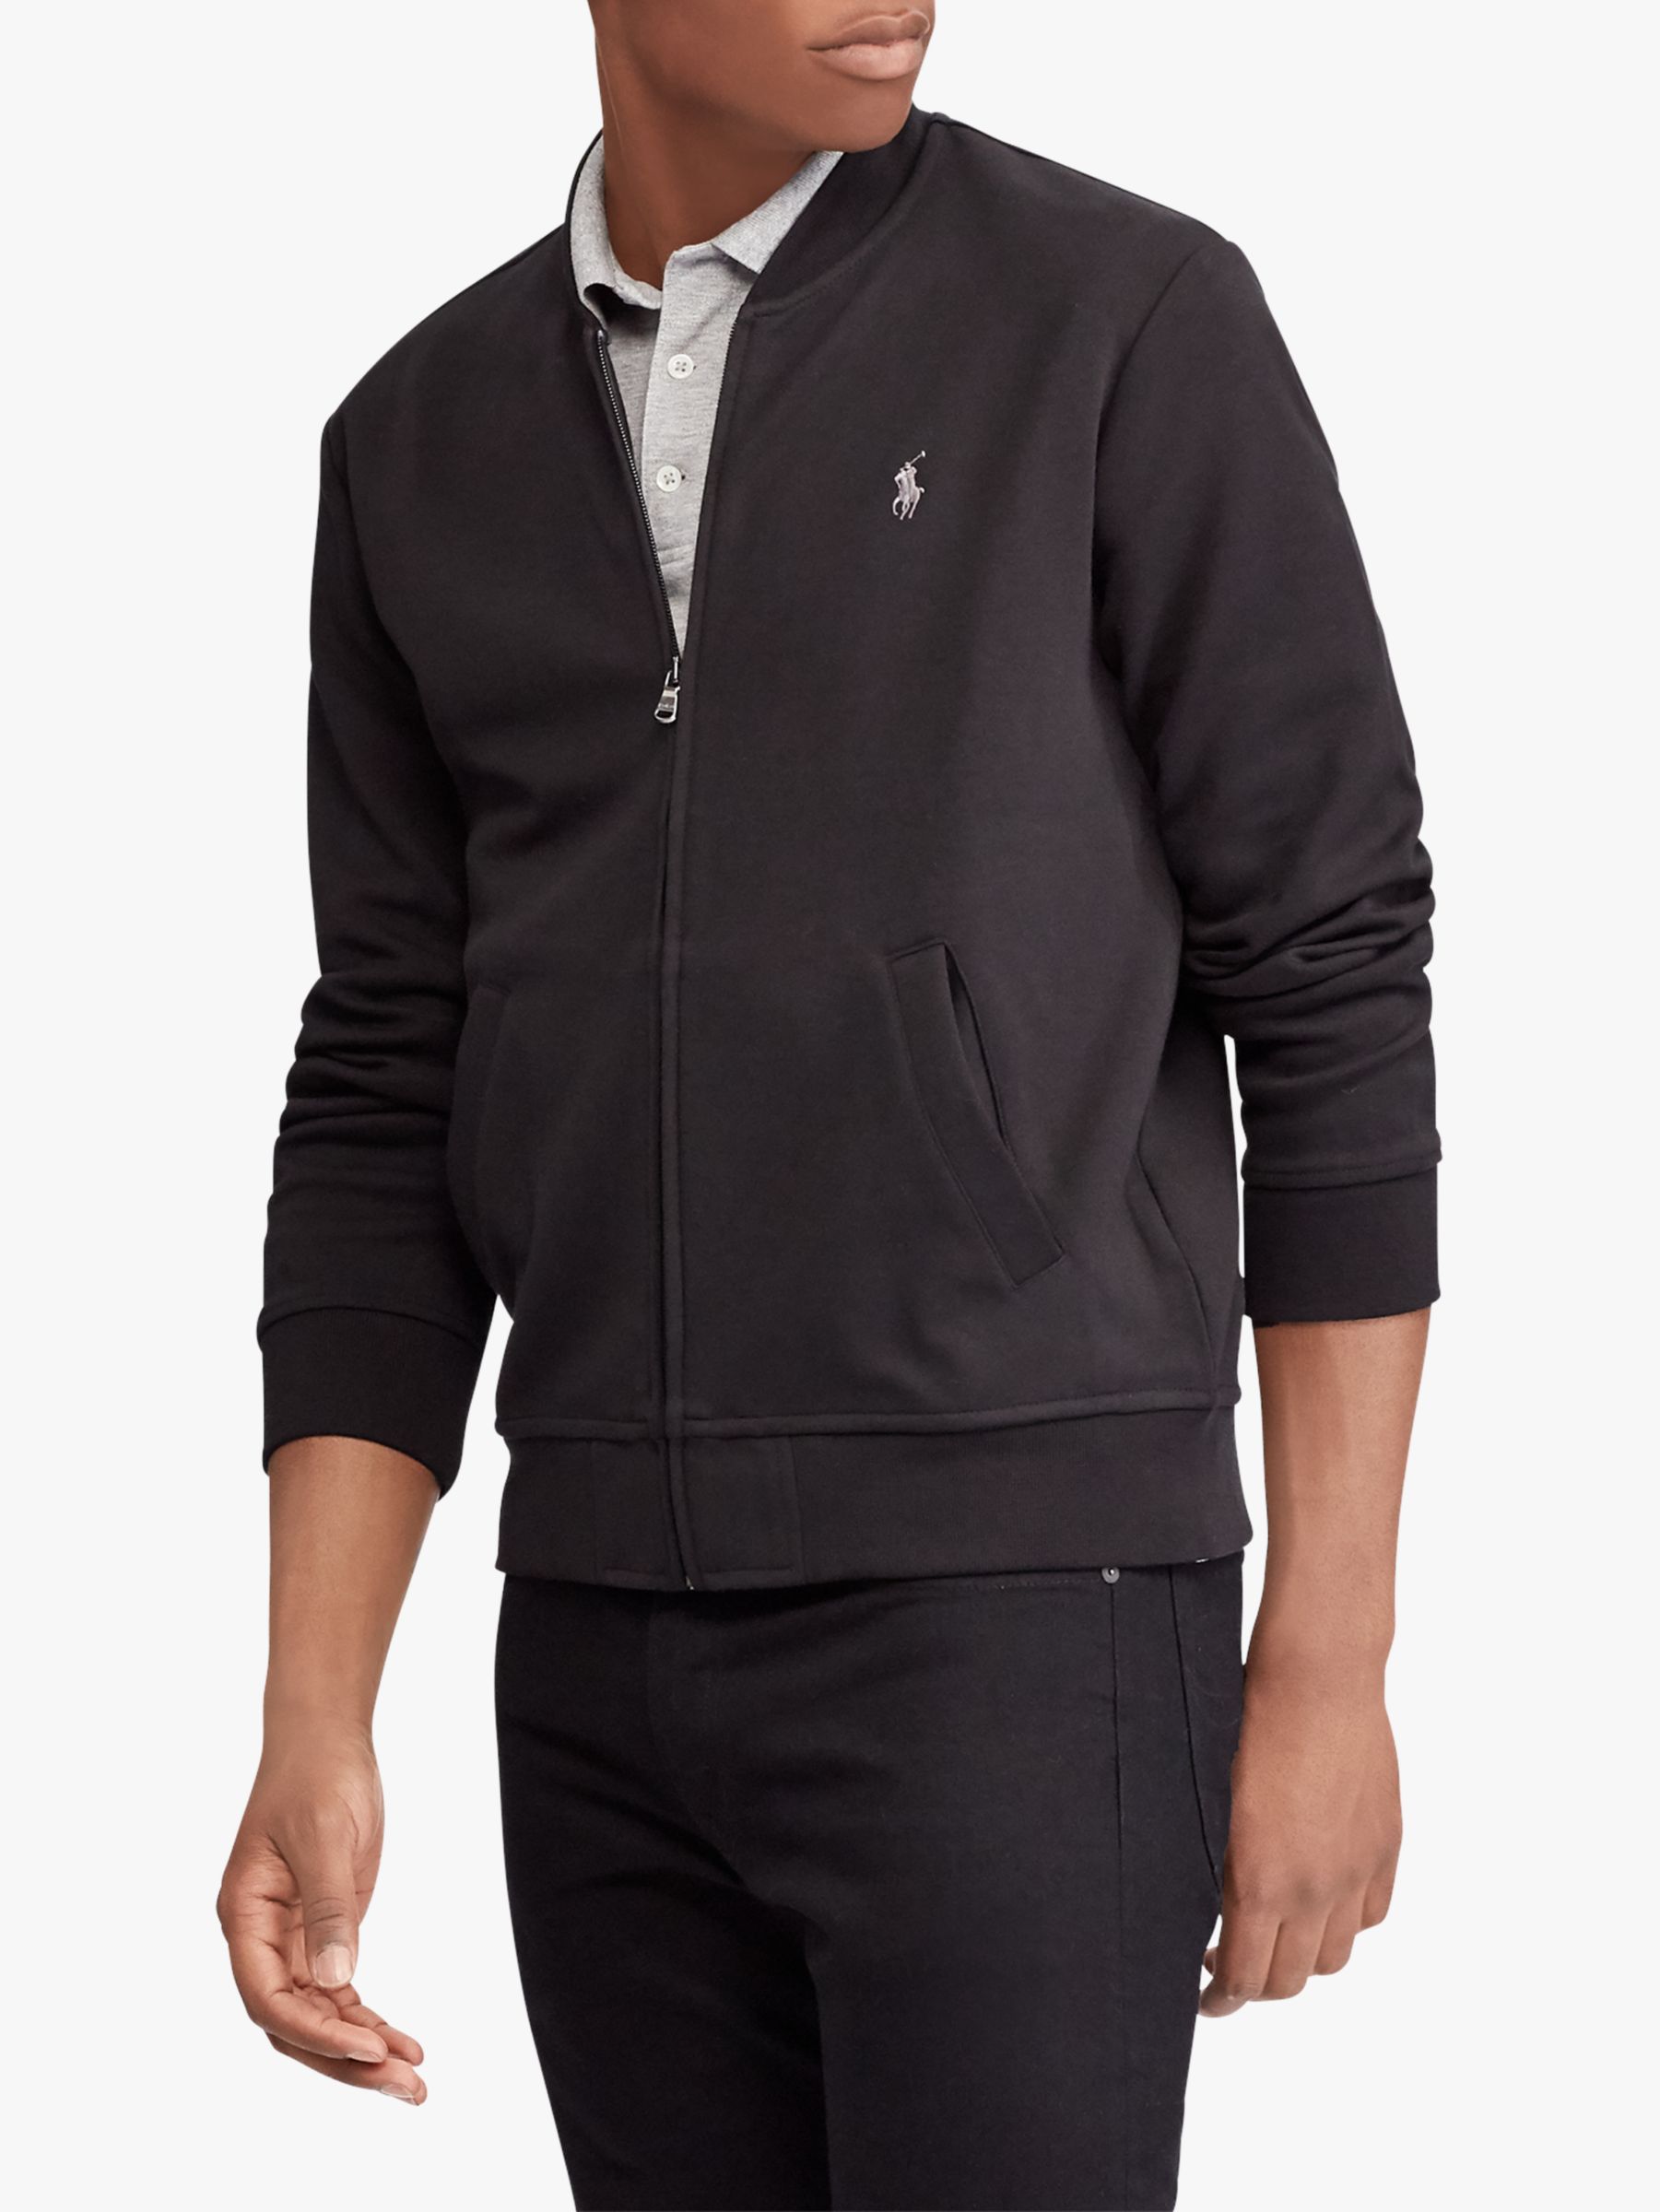 Polo Ralph Lauren Double-Knit Bomber Jacket, Black